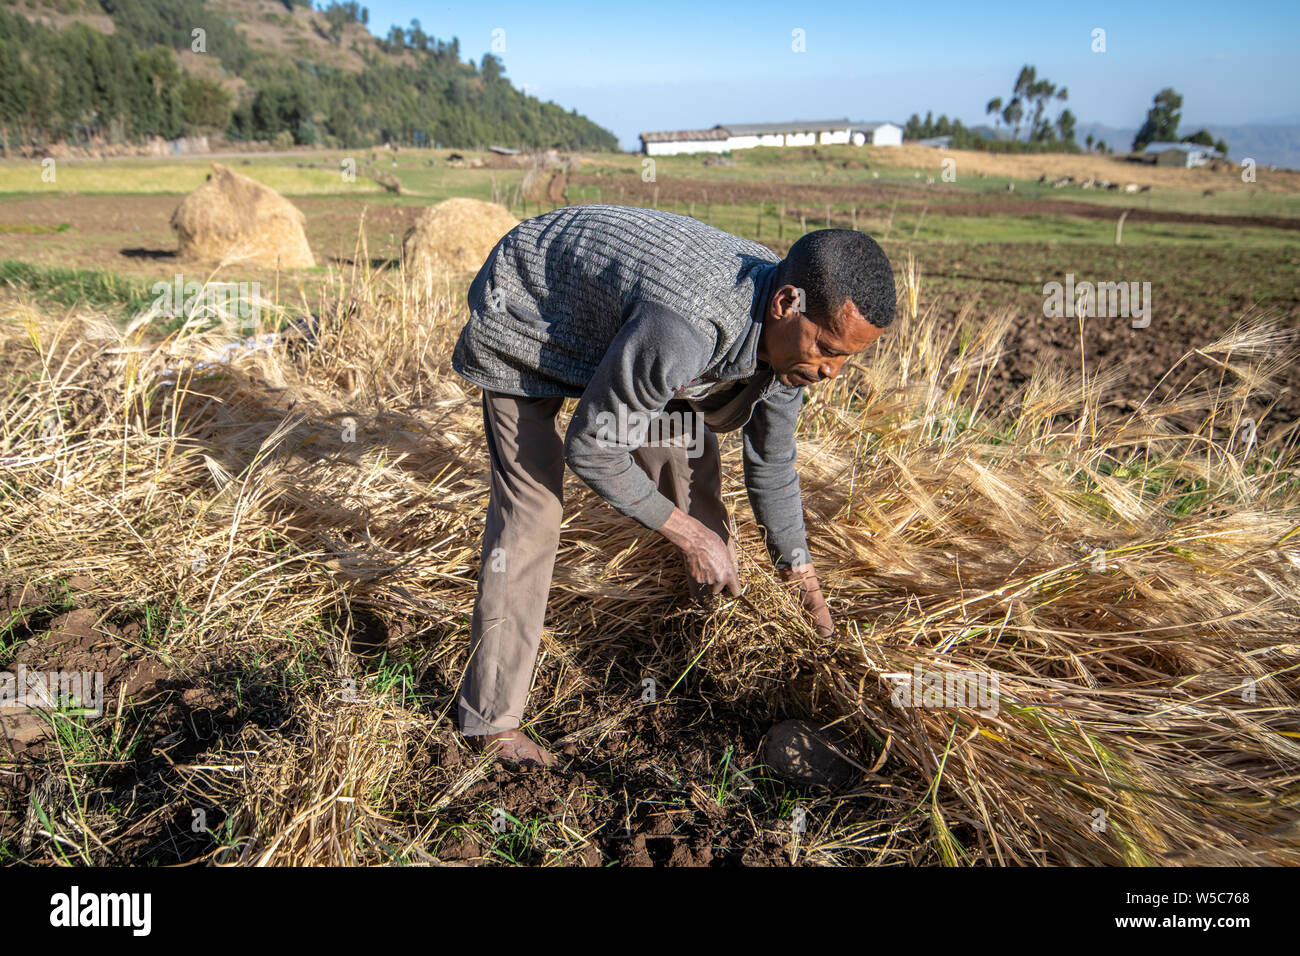 A man harvesting barley near Ankober, Ethiopia. Stock Photo